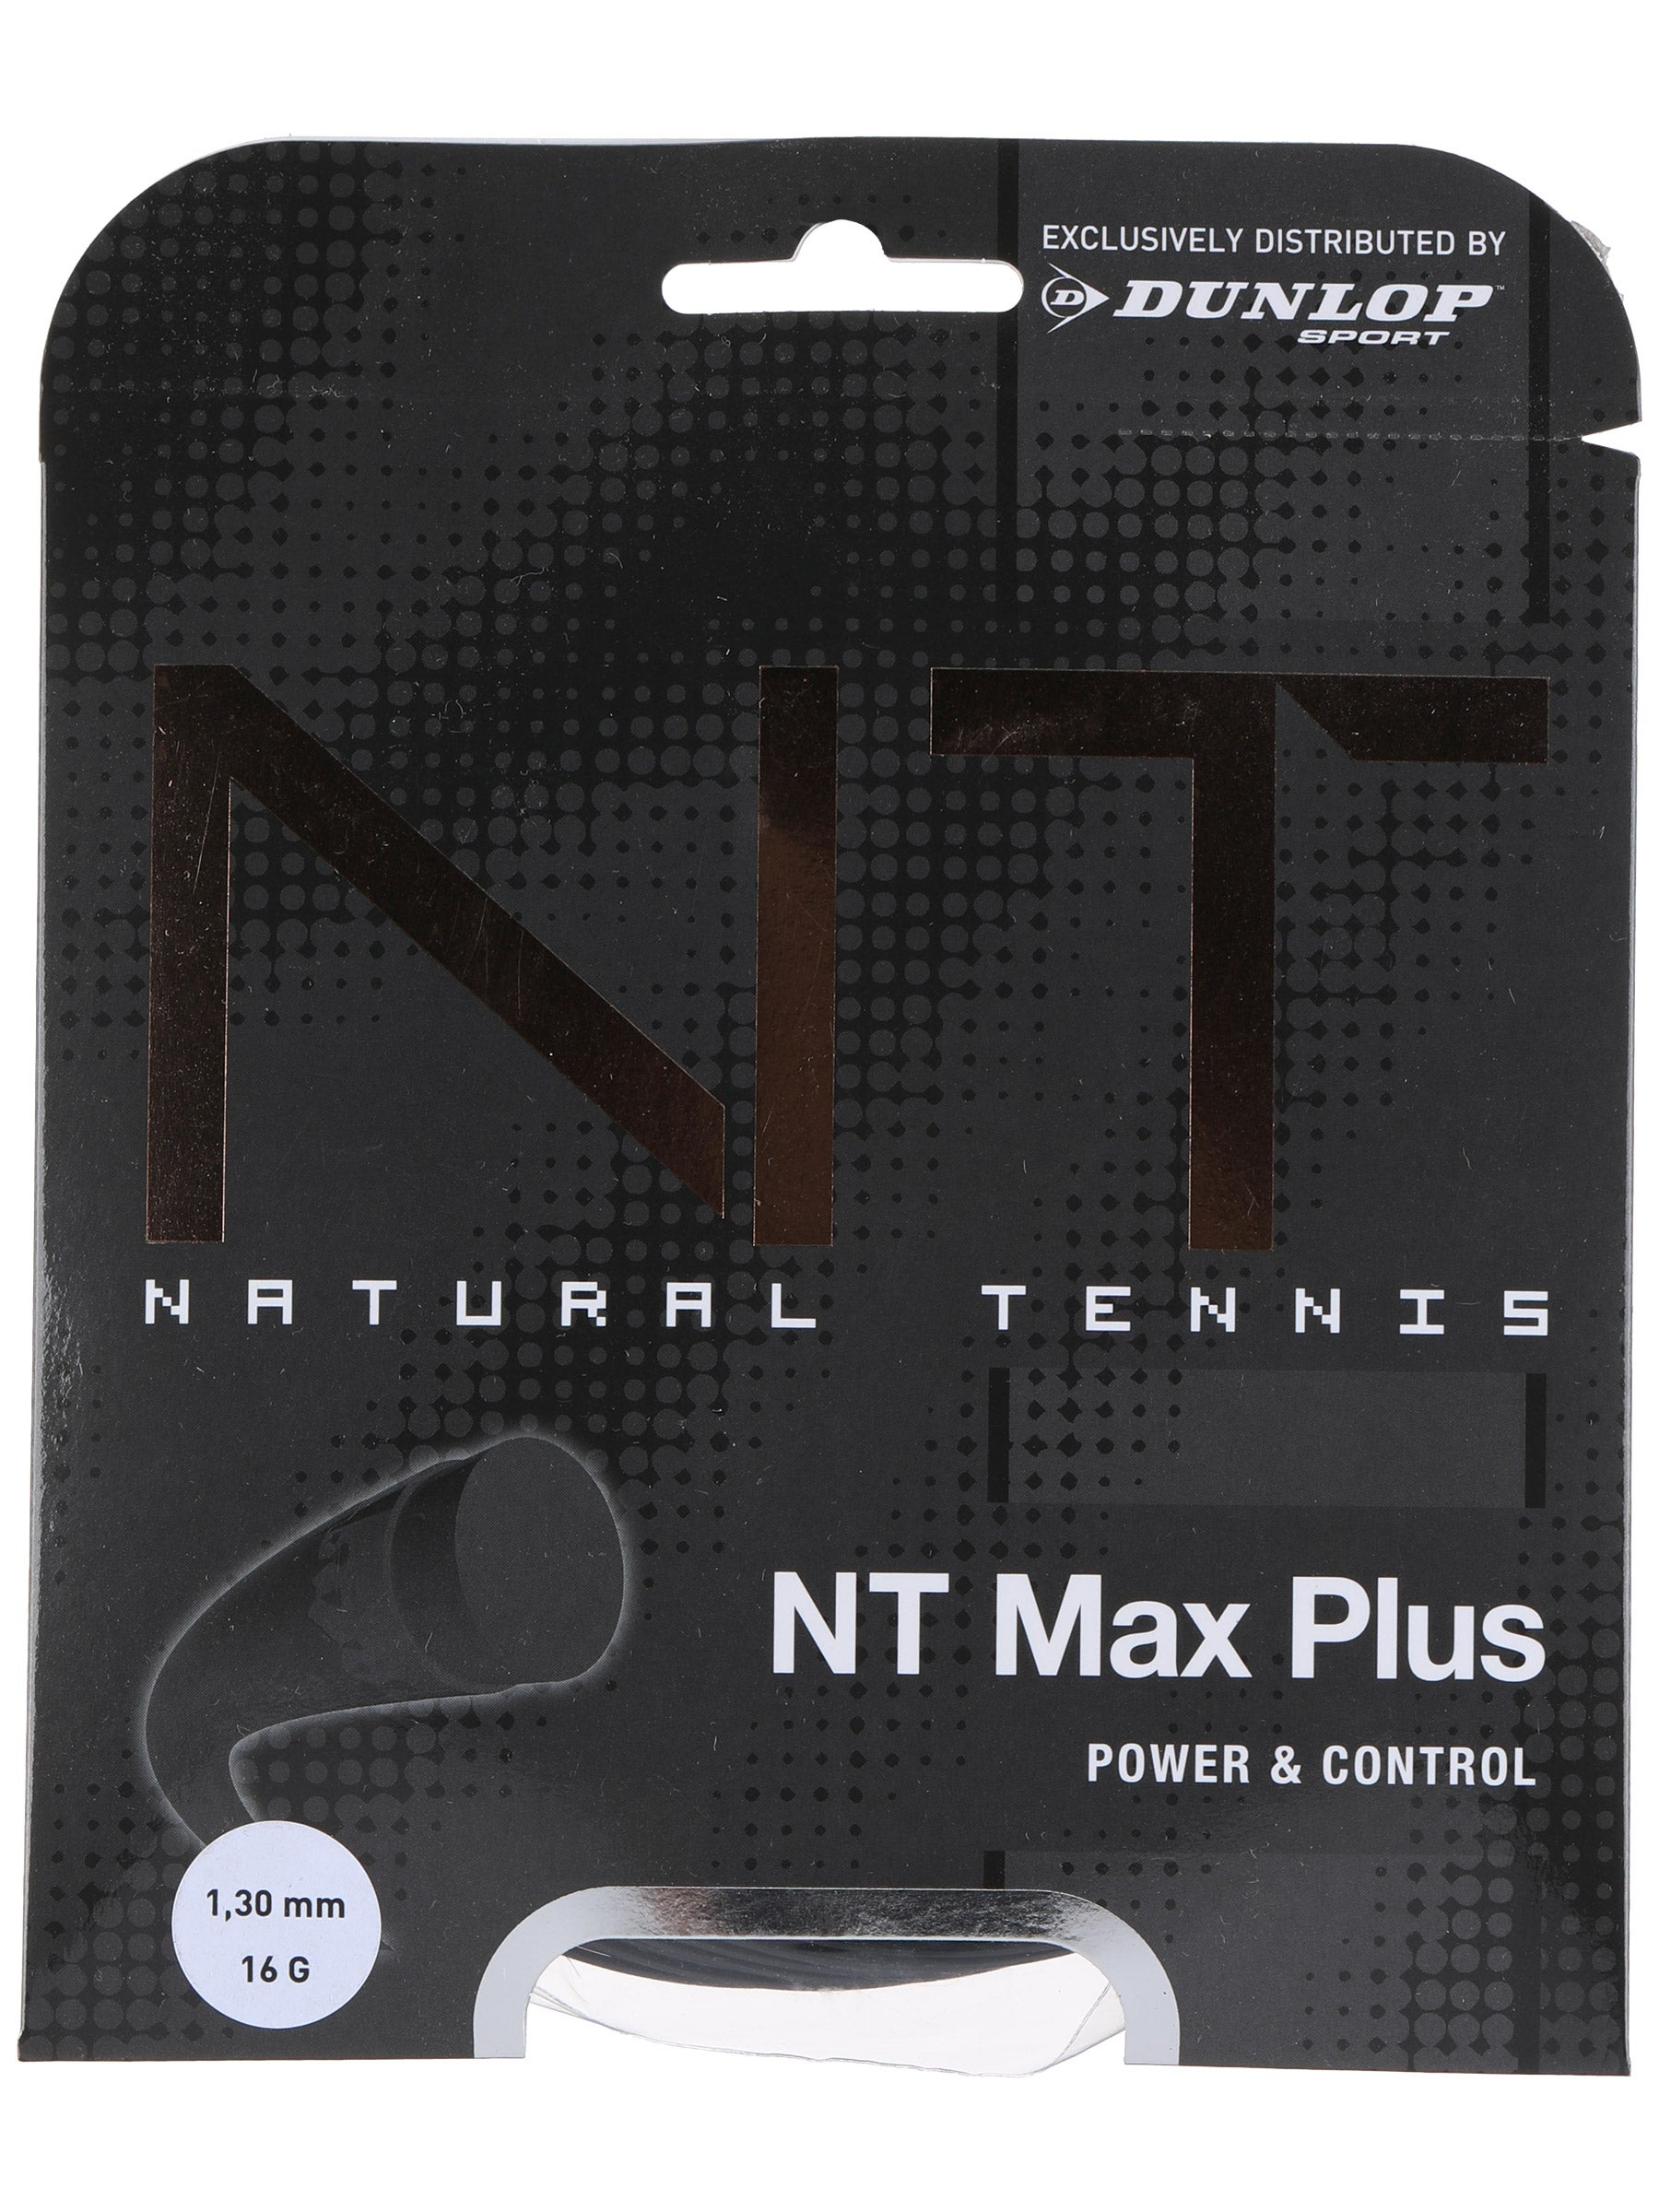 1,16€/m Dunlop NT Max Plus 12 m 1,30 mm Tennissaiten Tennis Strings 